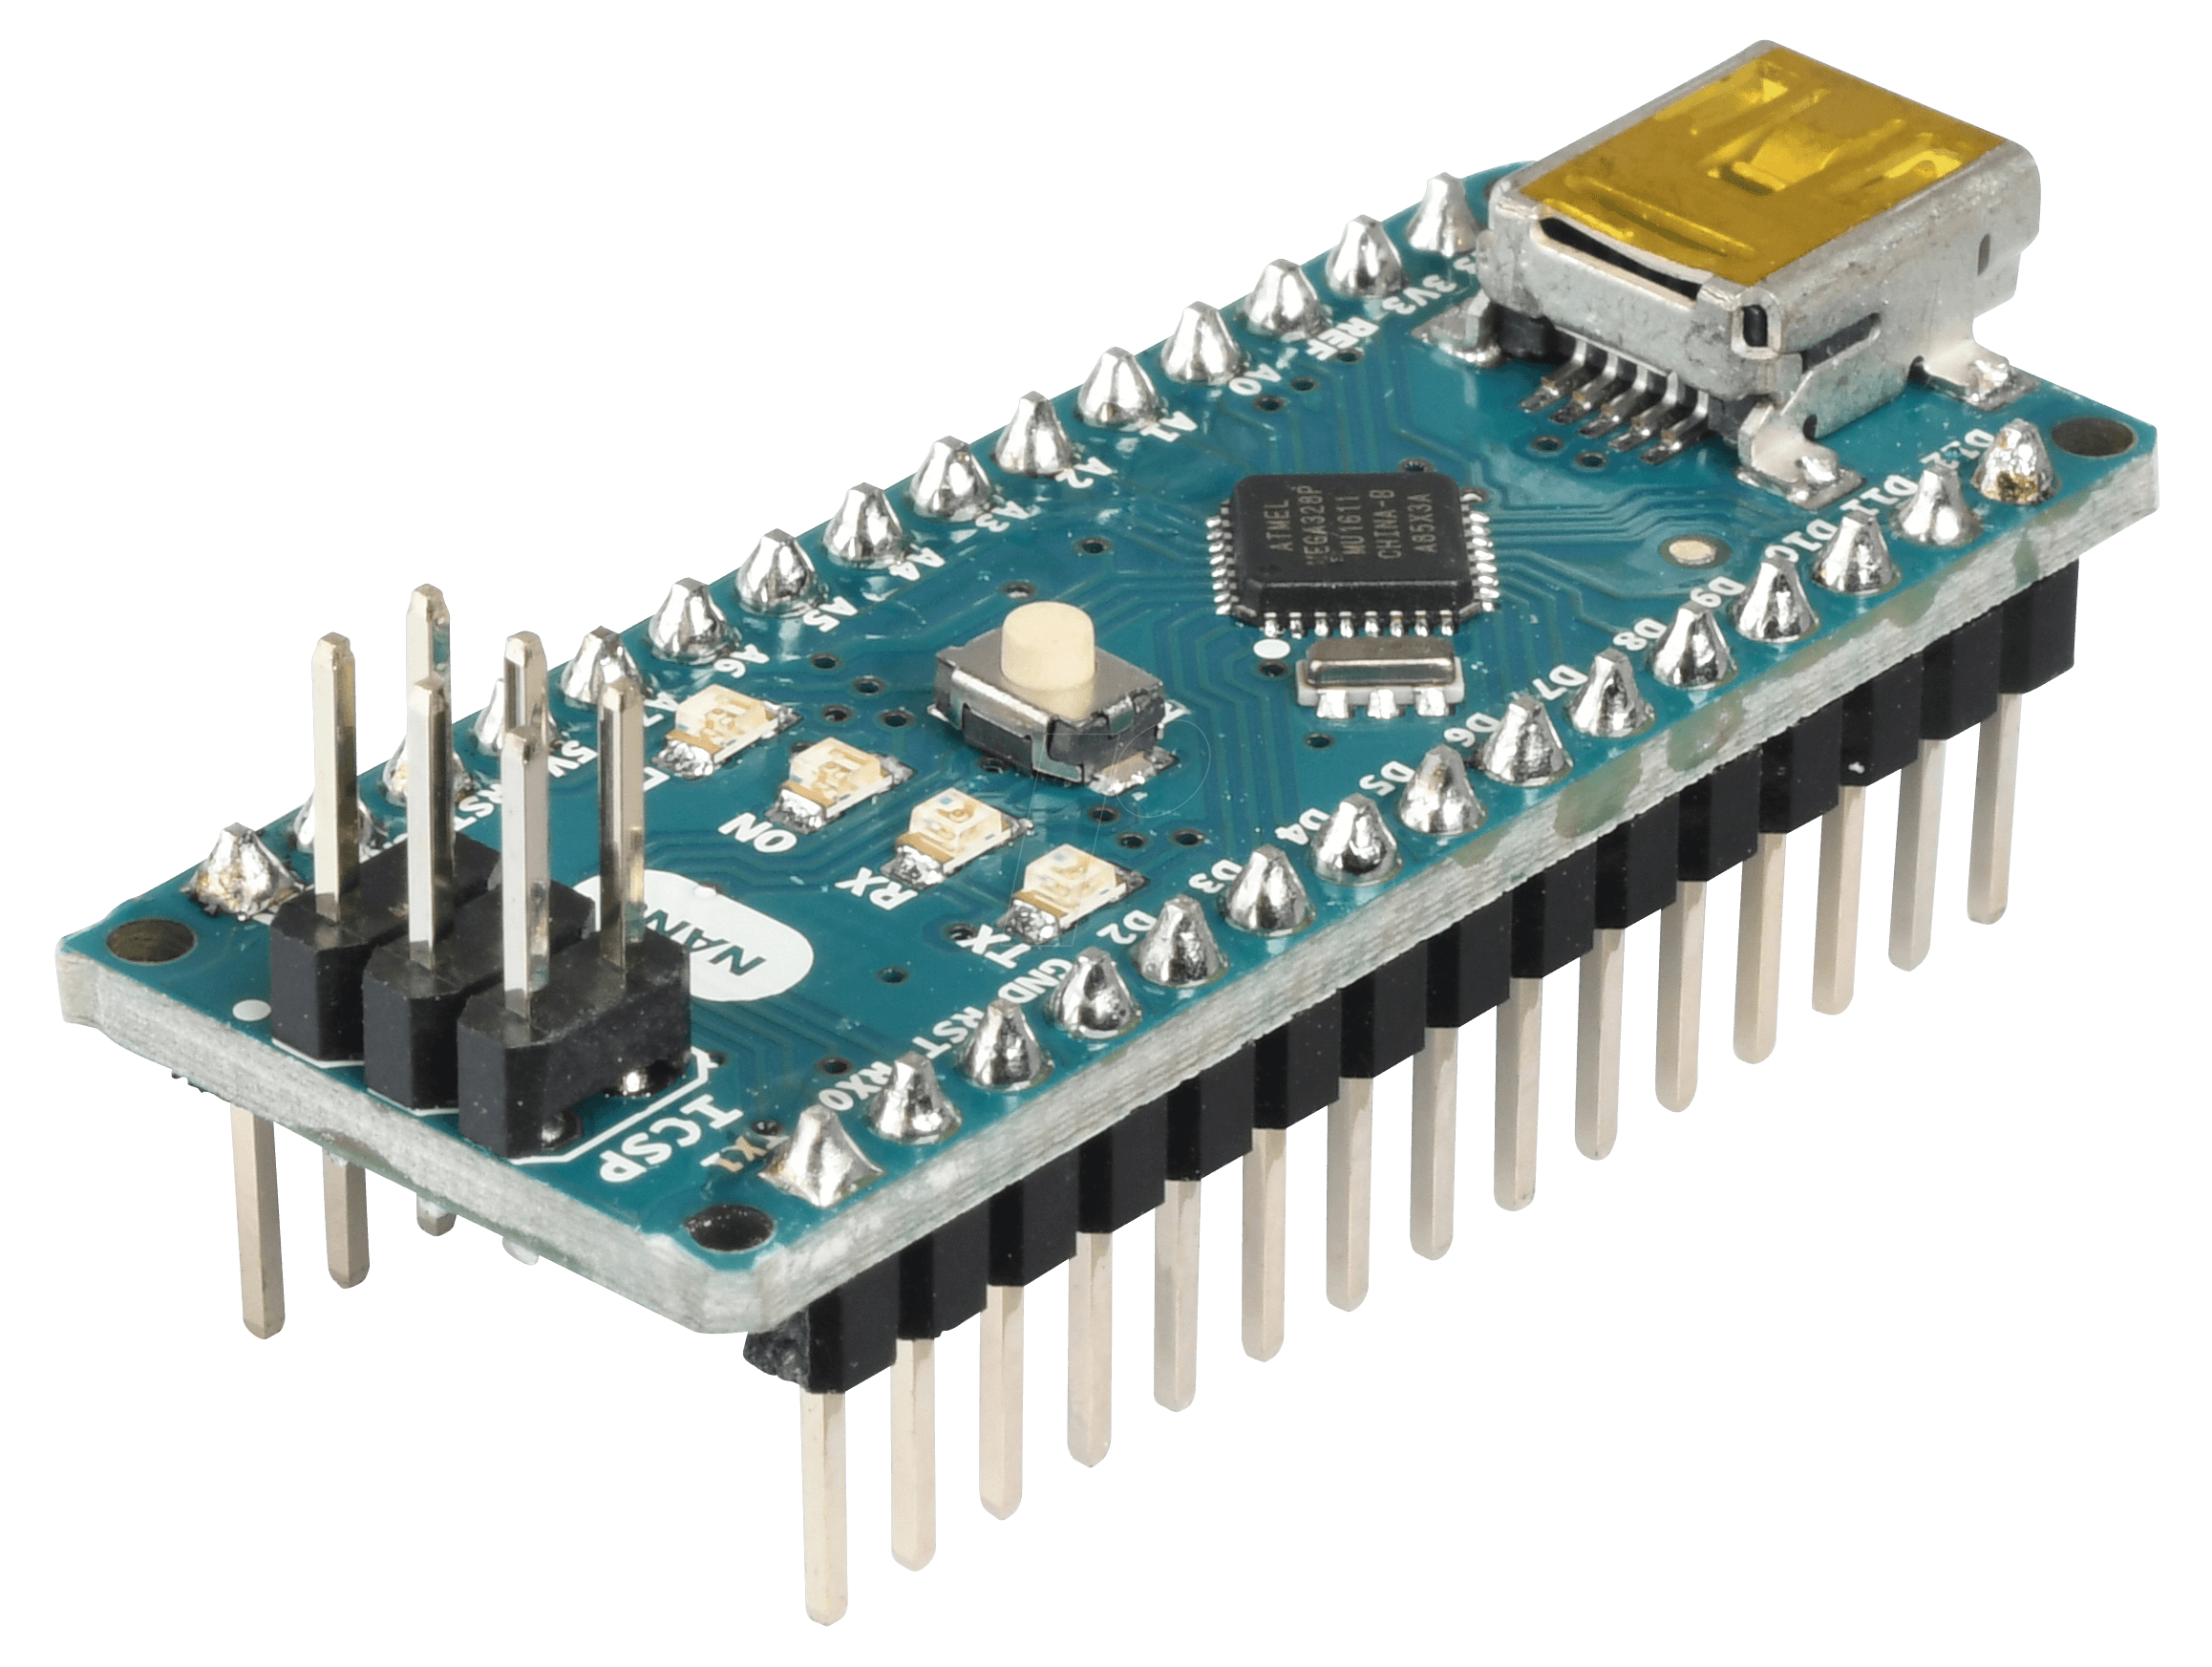 Arduino Nano [A000005]